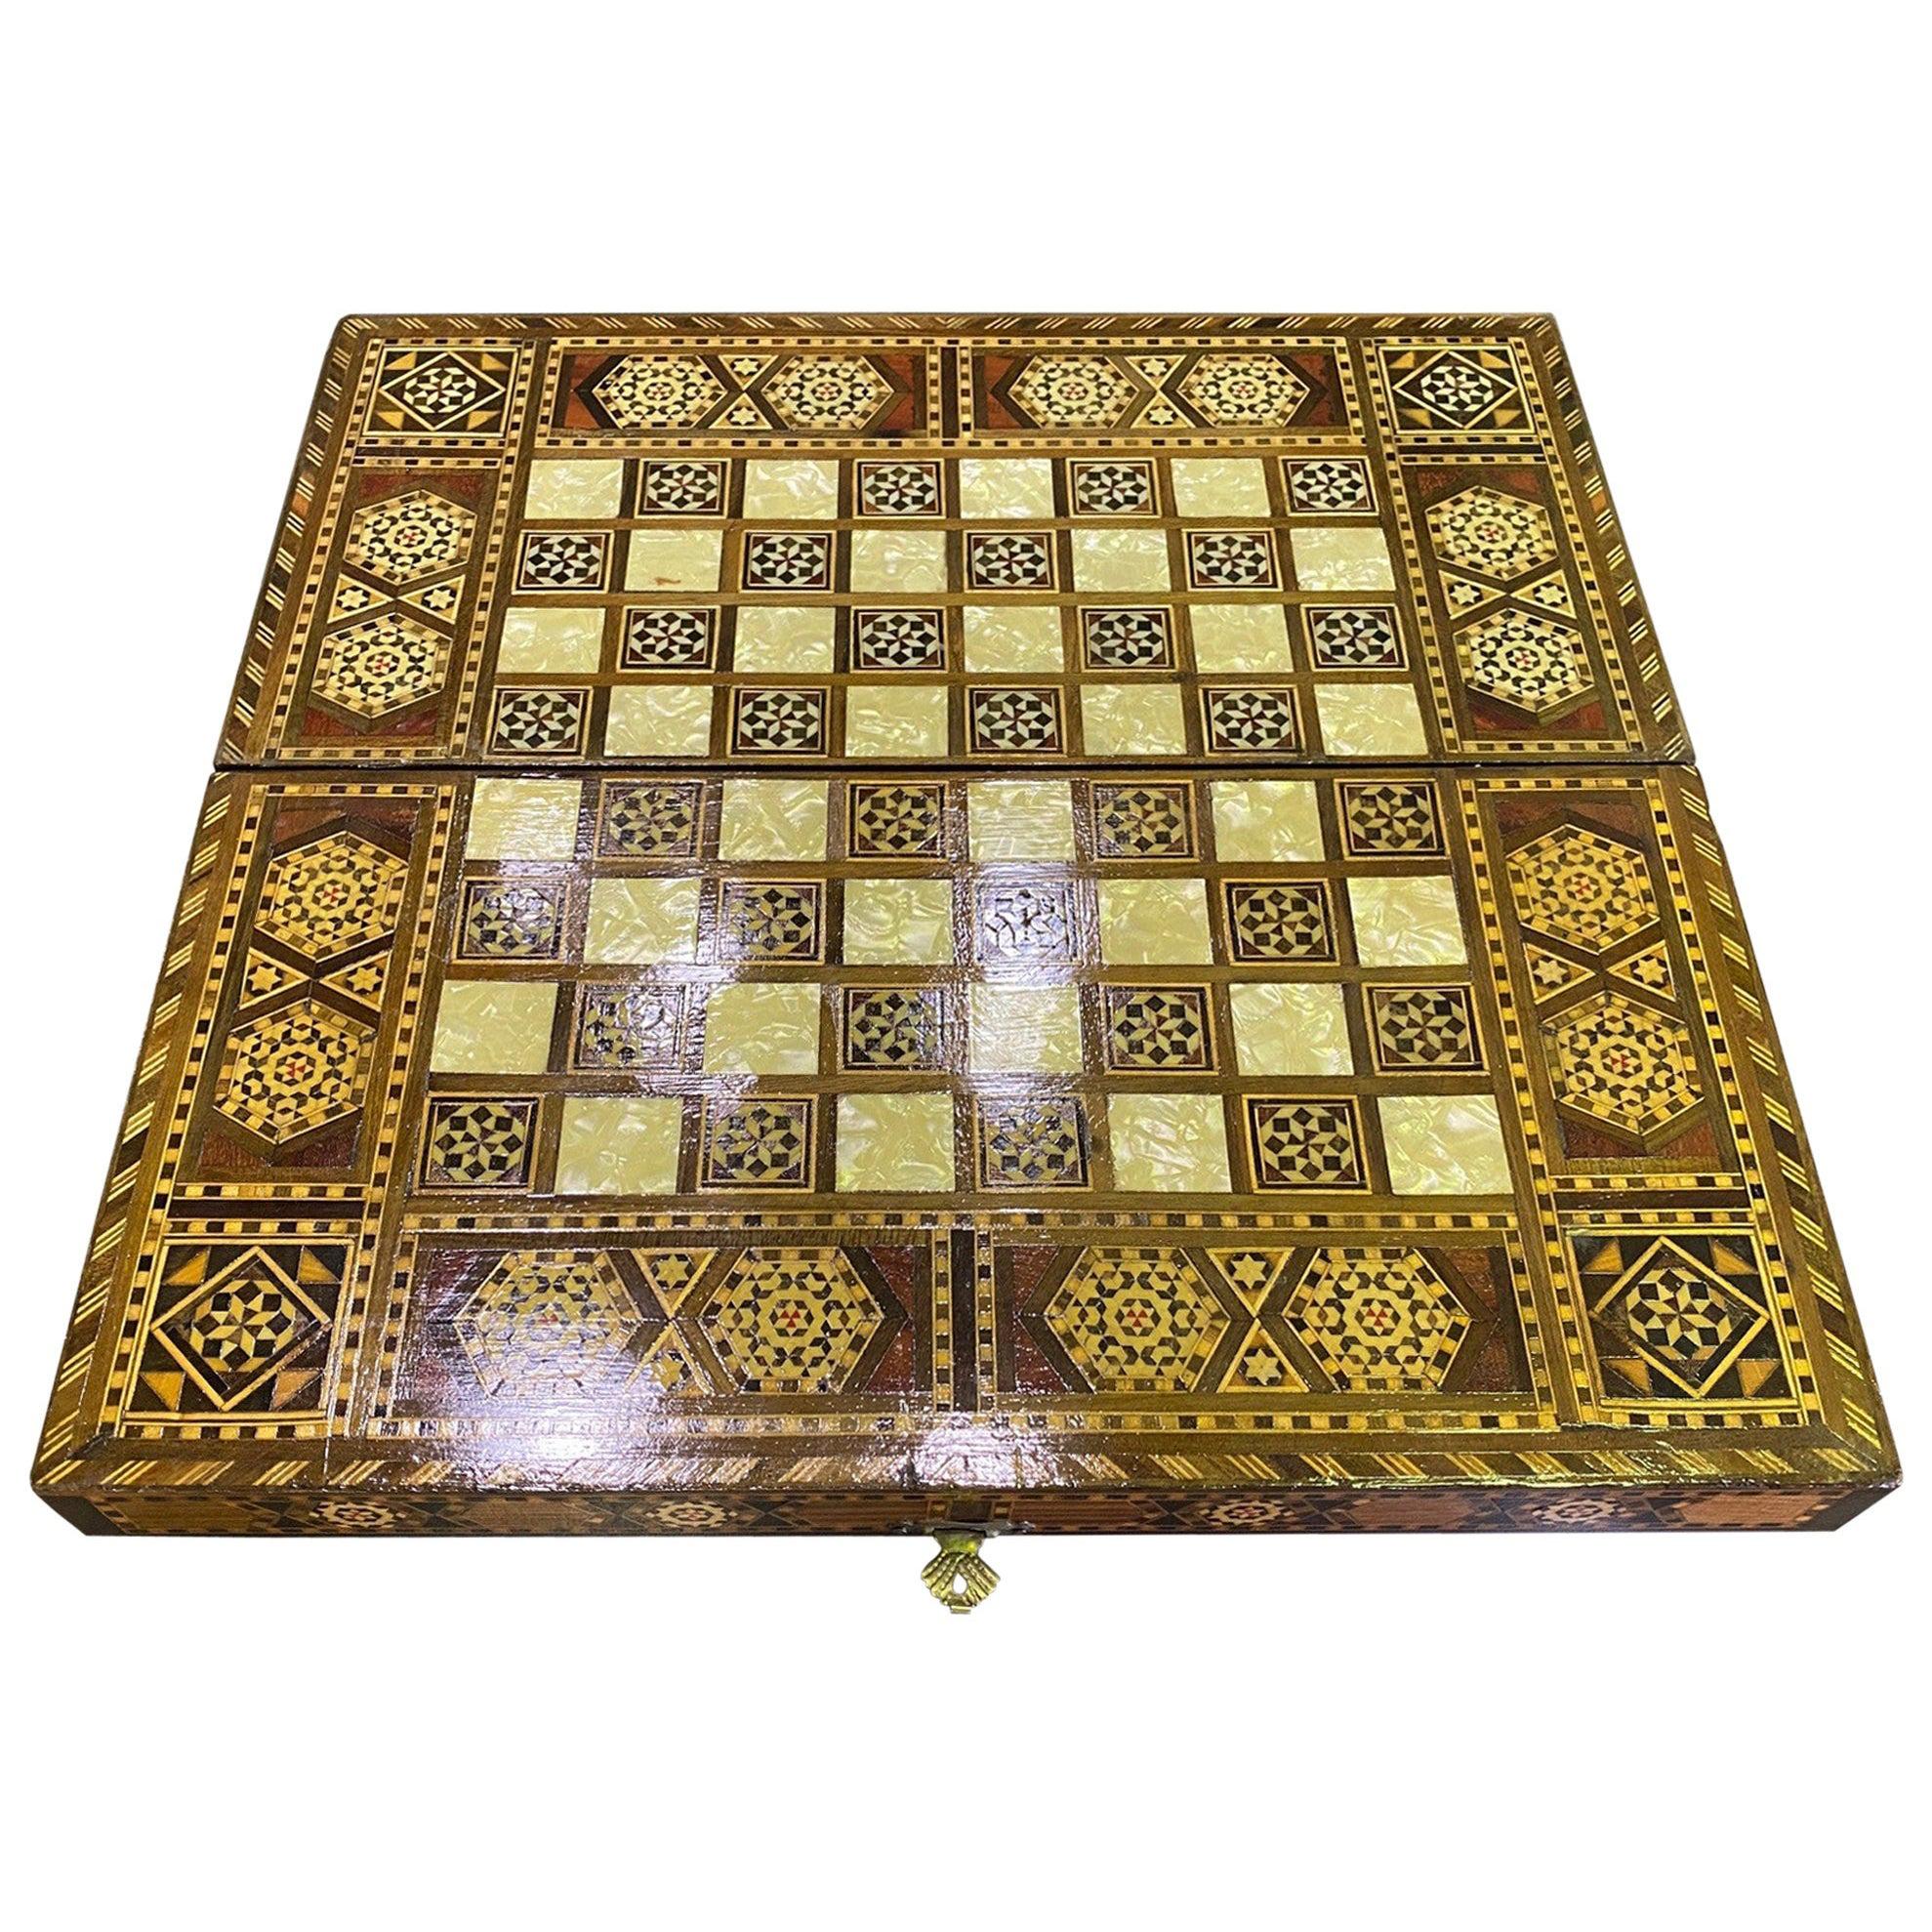 Syrian Moorish Inlaid Mosaic Backgammon and Chess Wooden Game Board Box